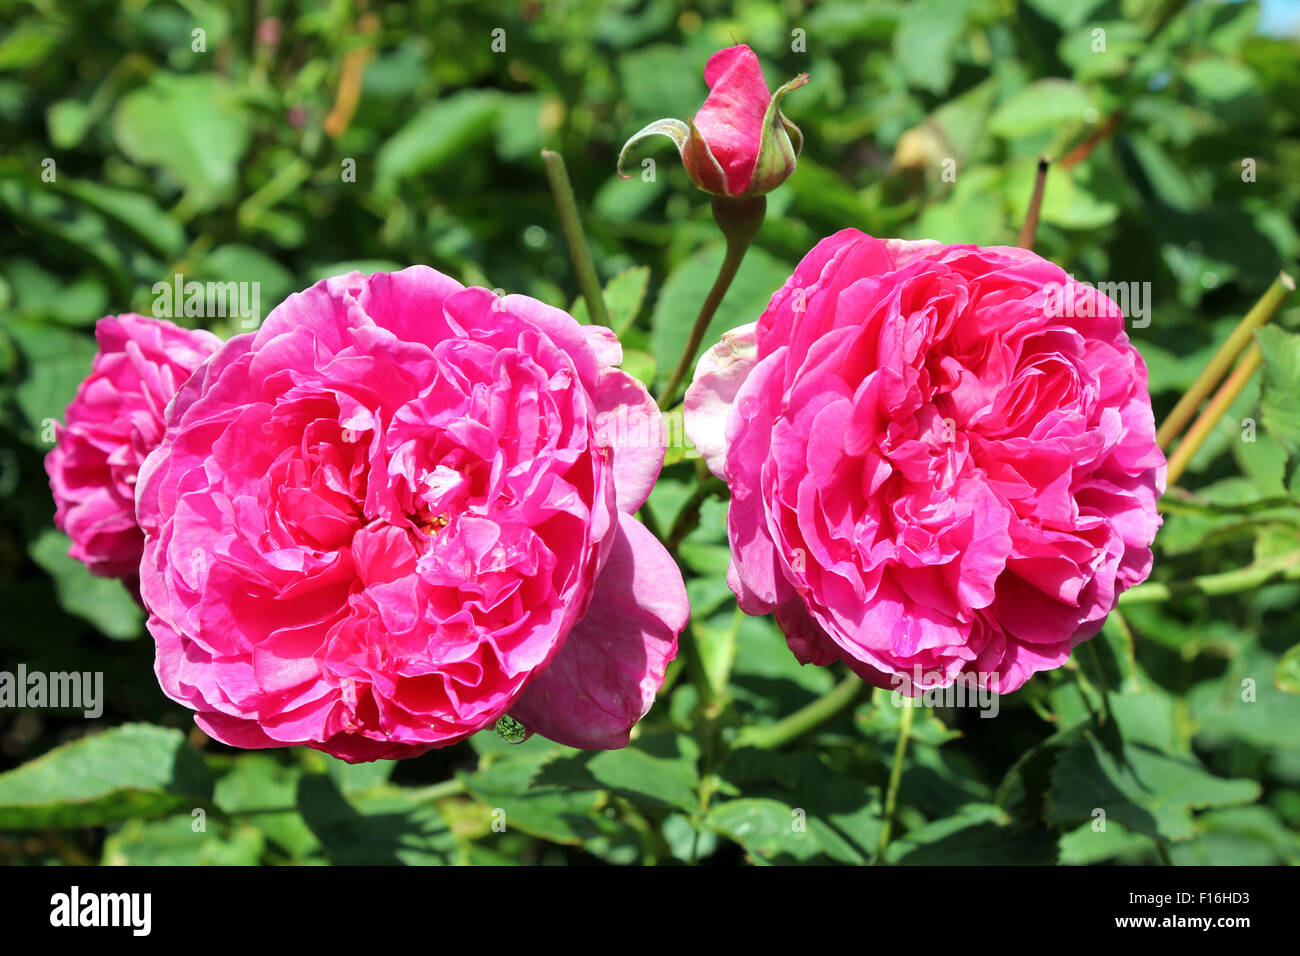 Rosa englands rose david austin hi-res stock photography and images - Alamy